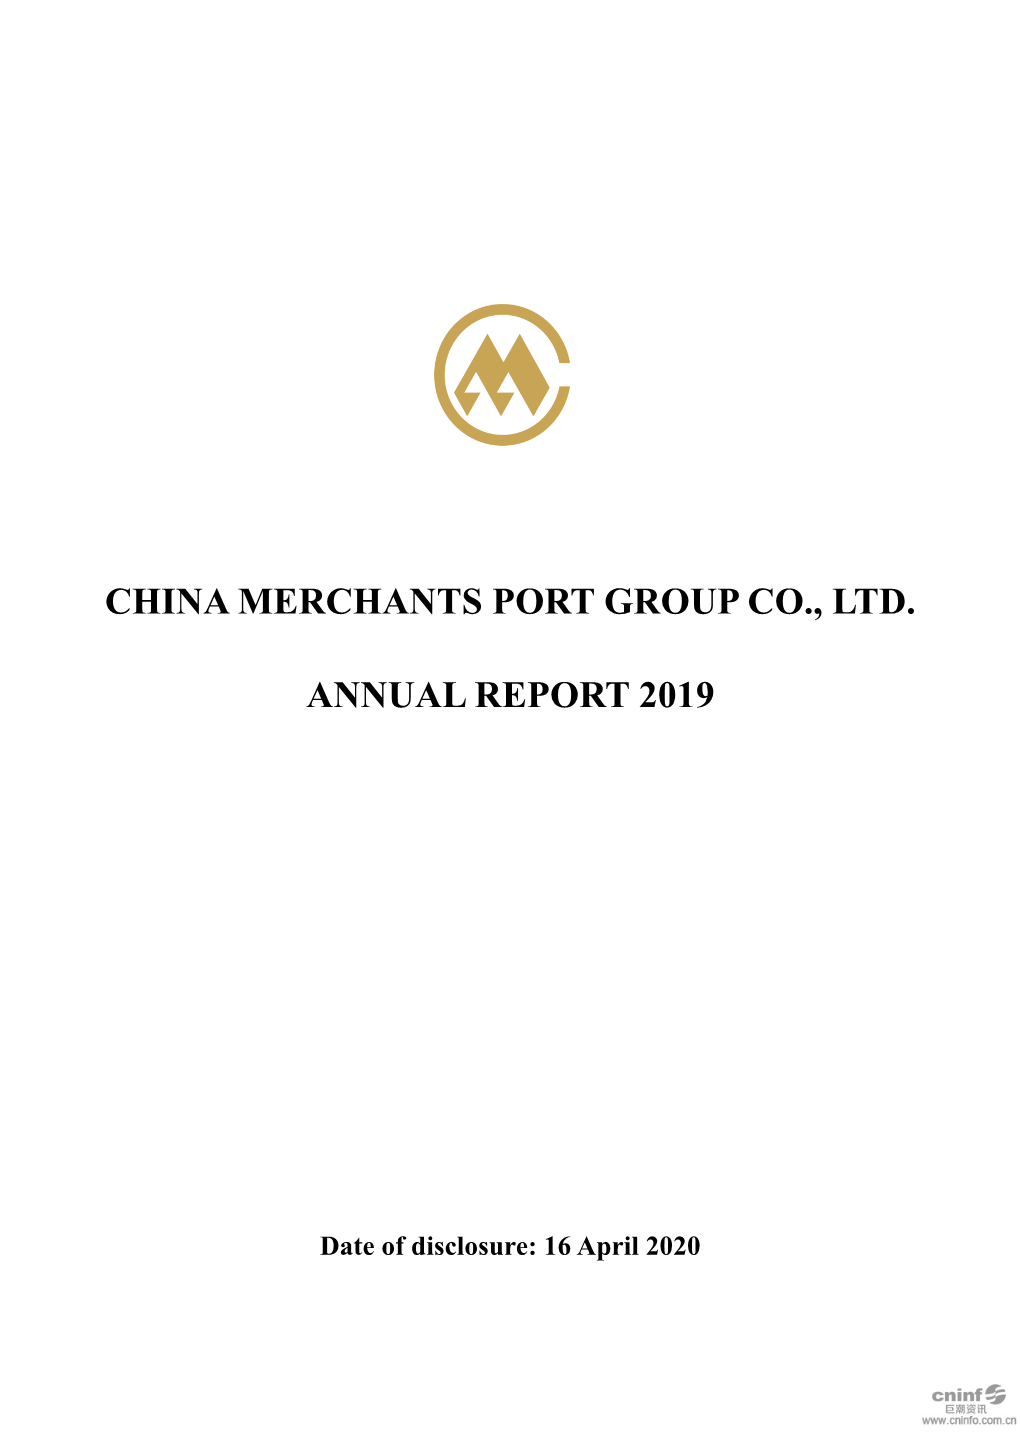 China Merchants Port Group Co., Ltd. Annual Report 2019